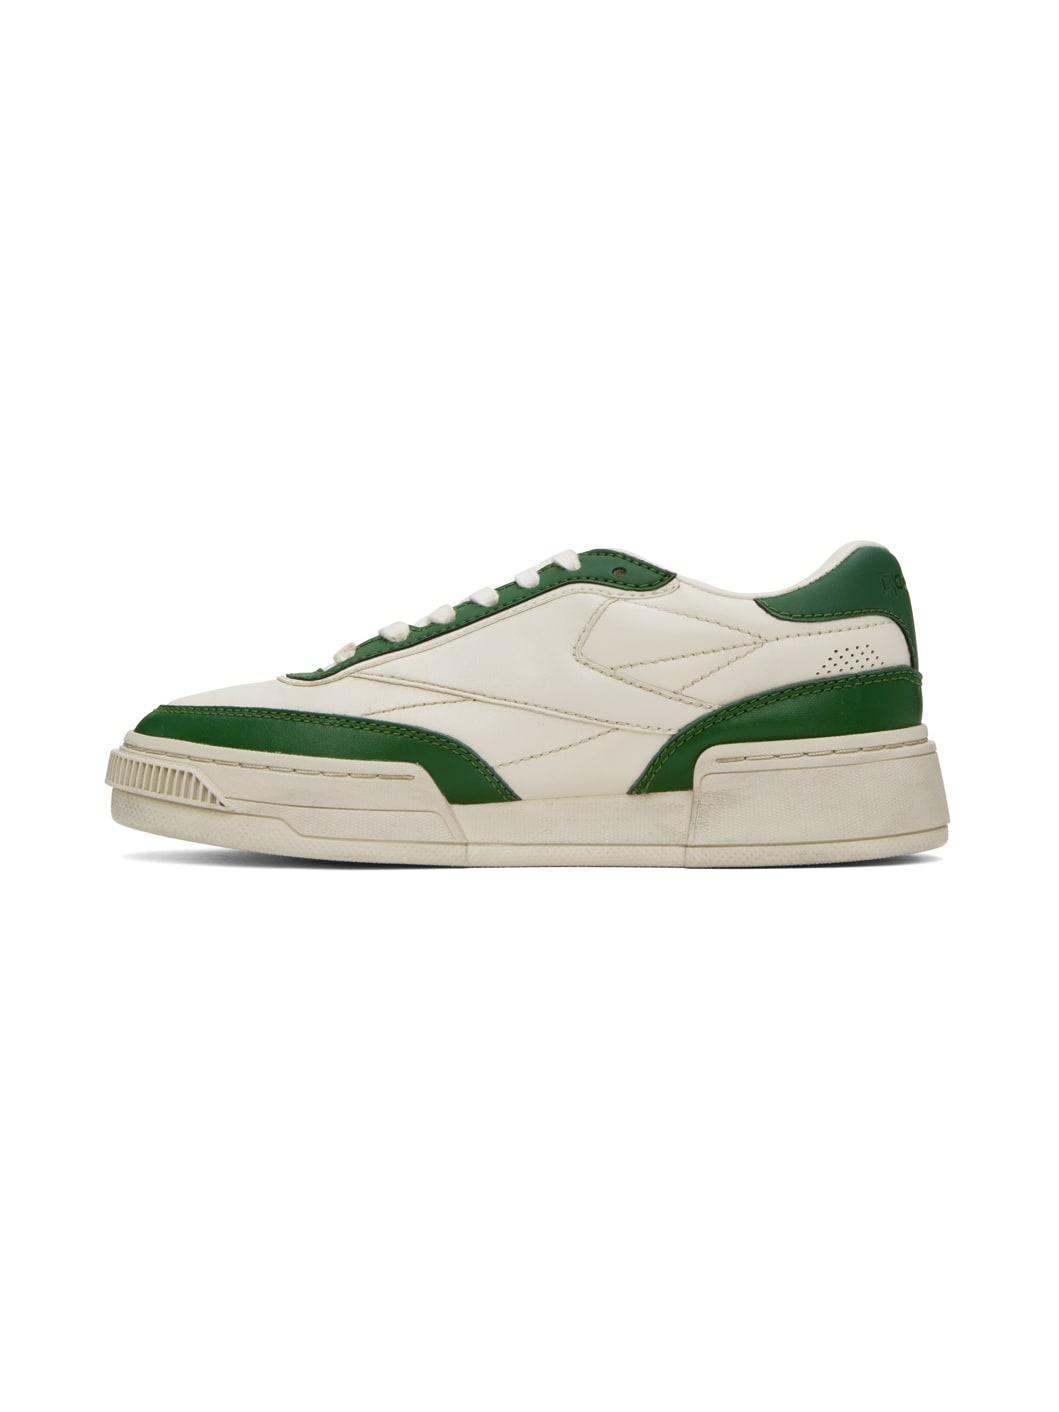 Off-White & Green Club C LTD Sneakers - 3